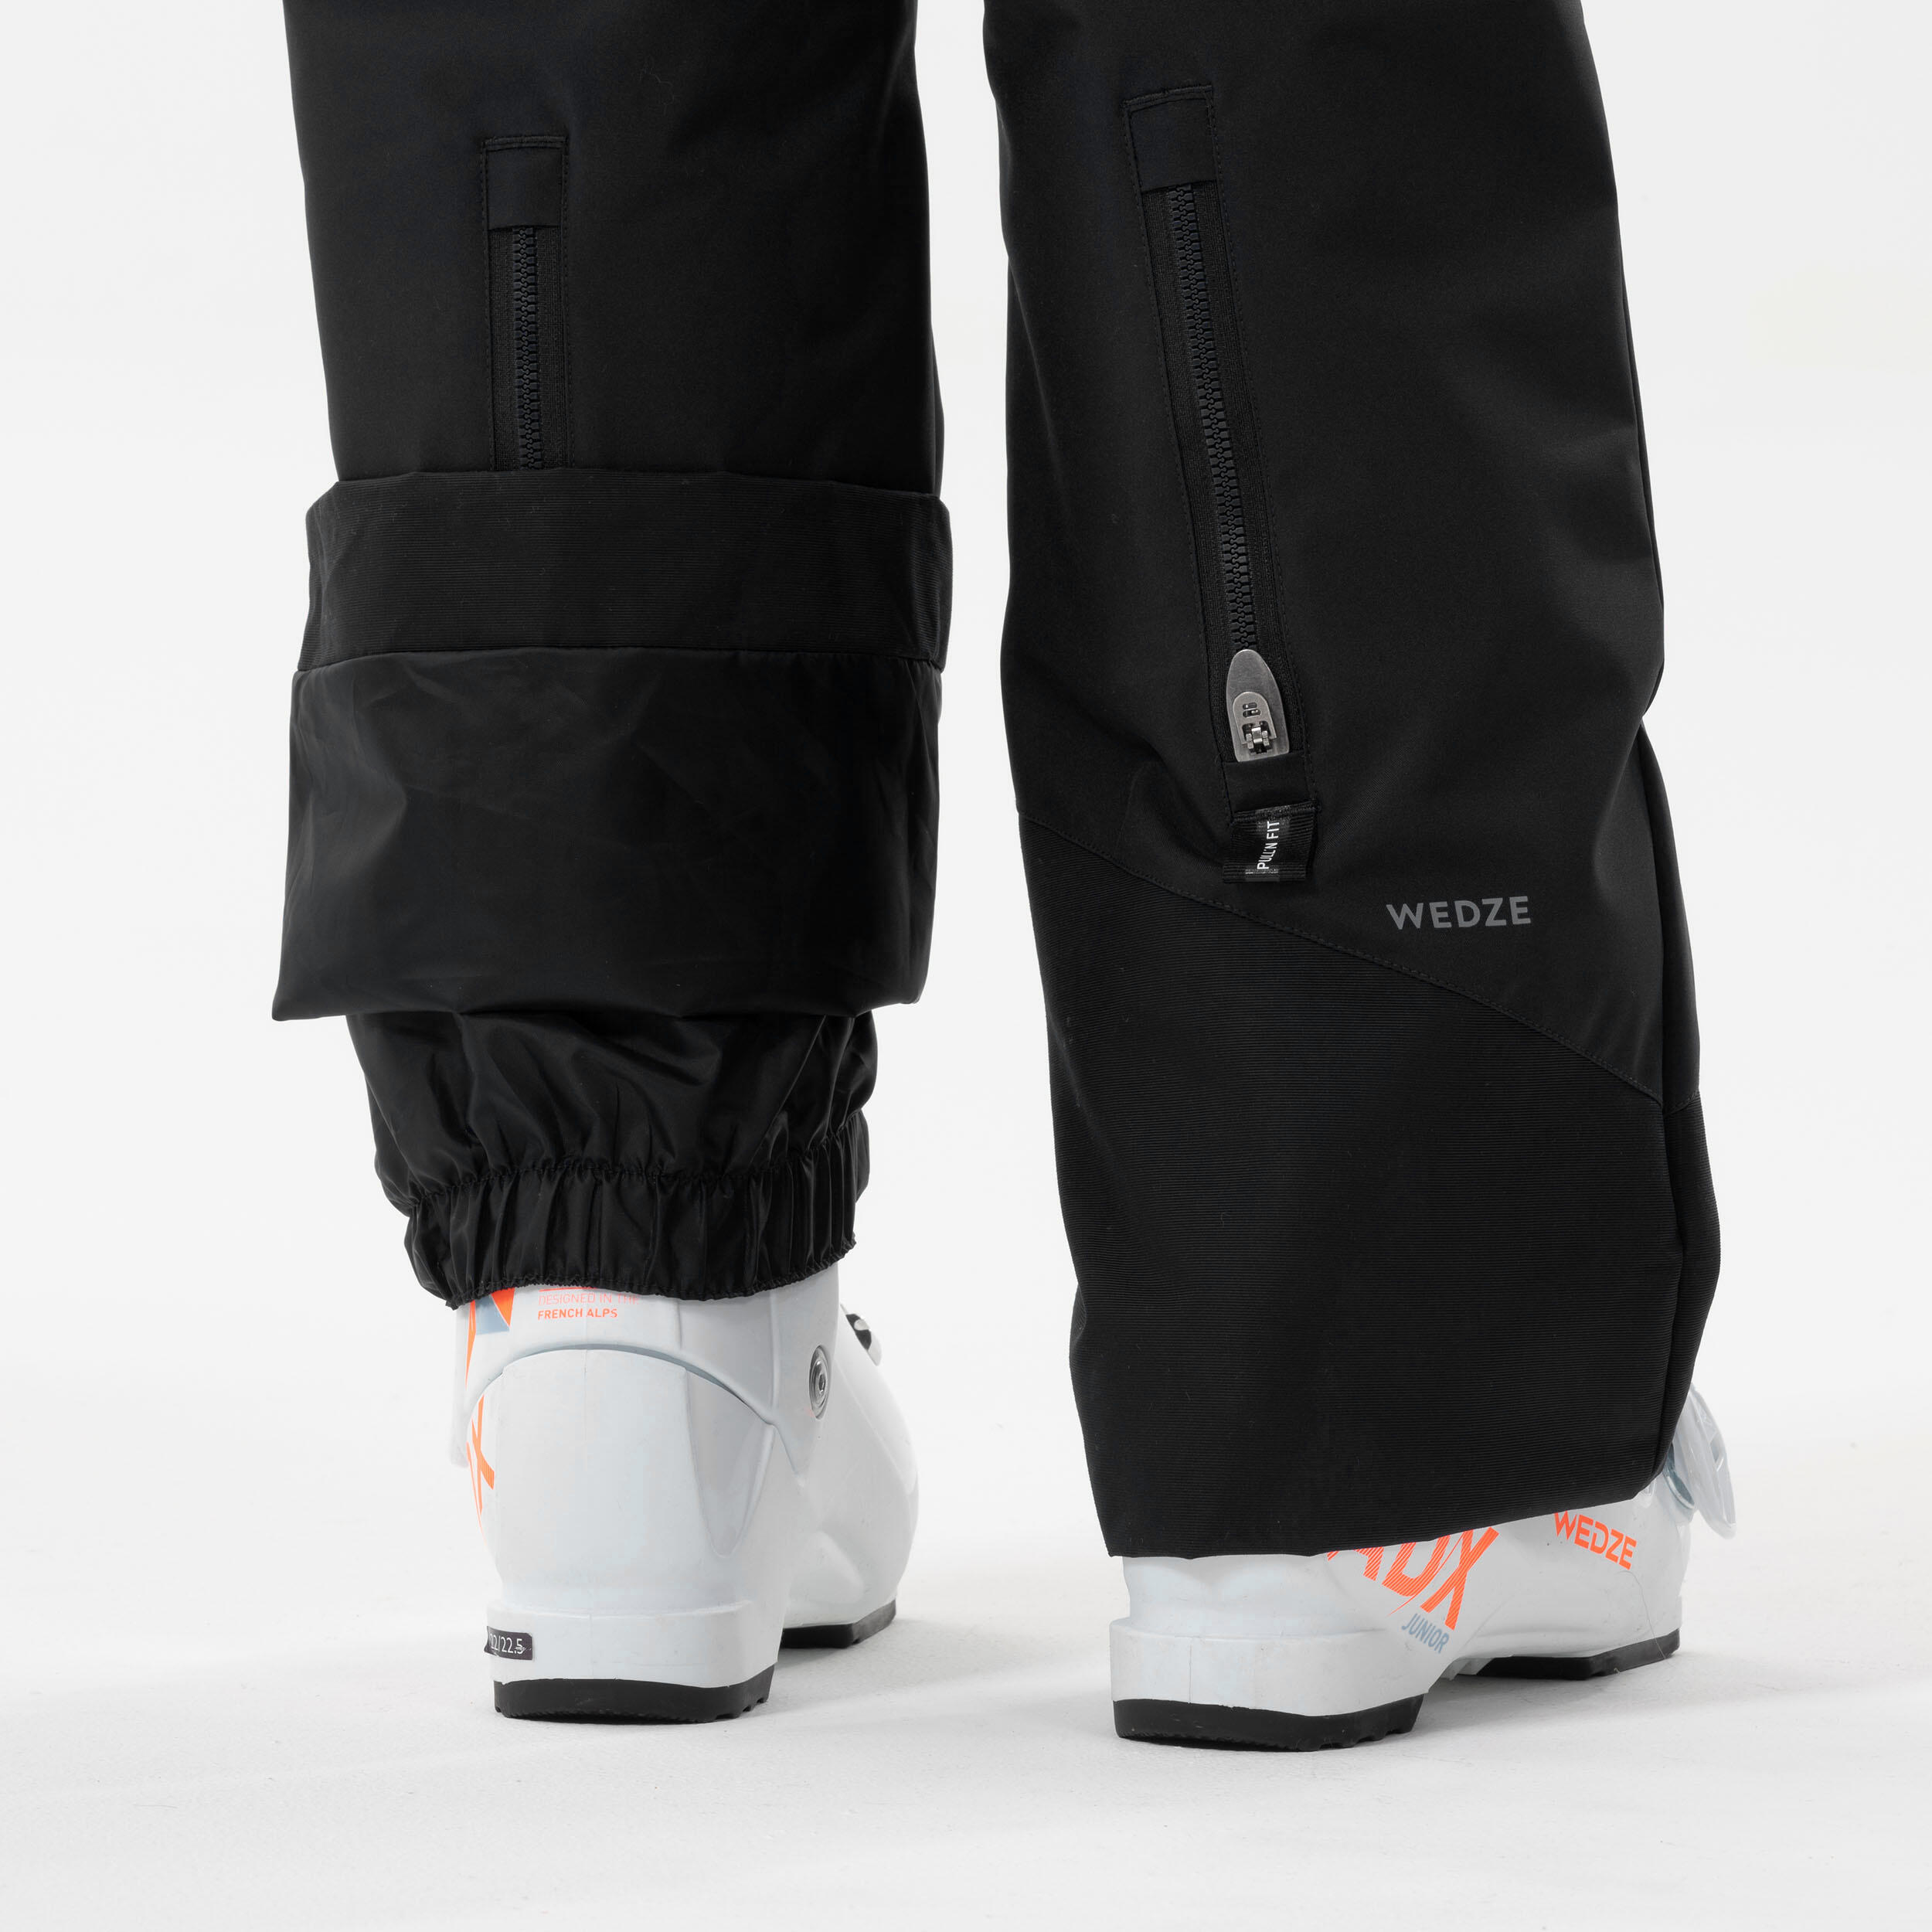 Kids' Ski Pants - PNF 500 - graphite black - Wedze - Decathlon